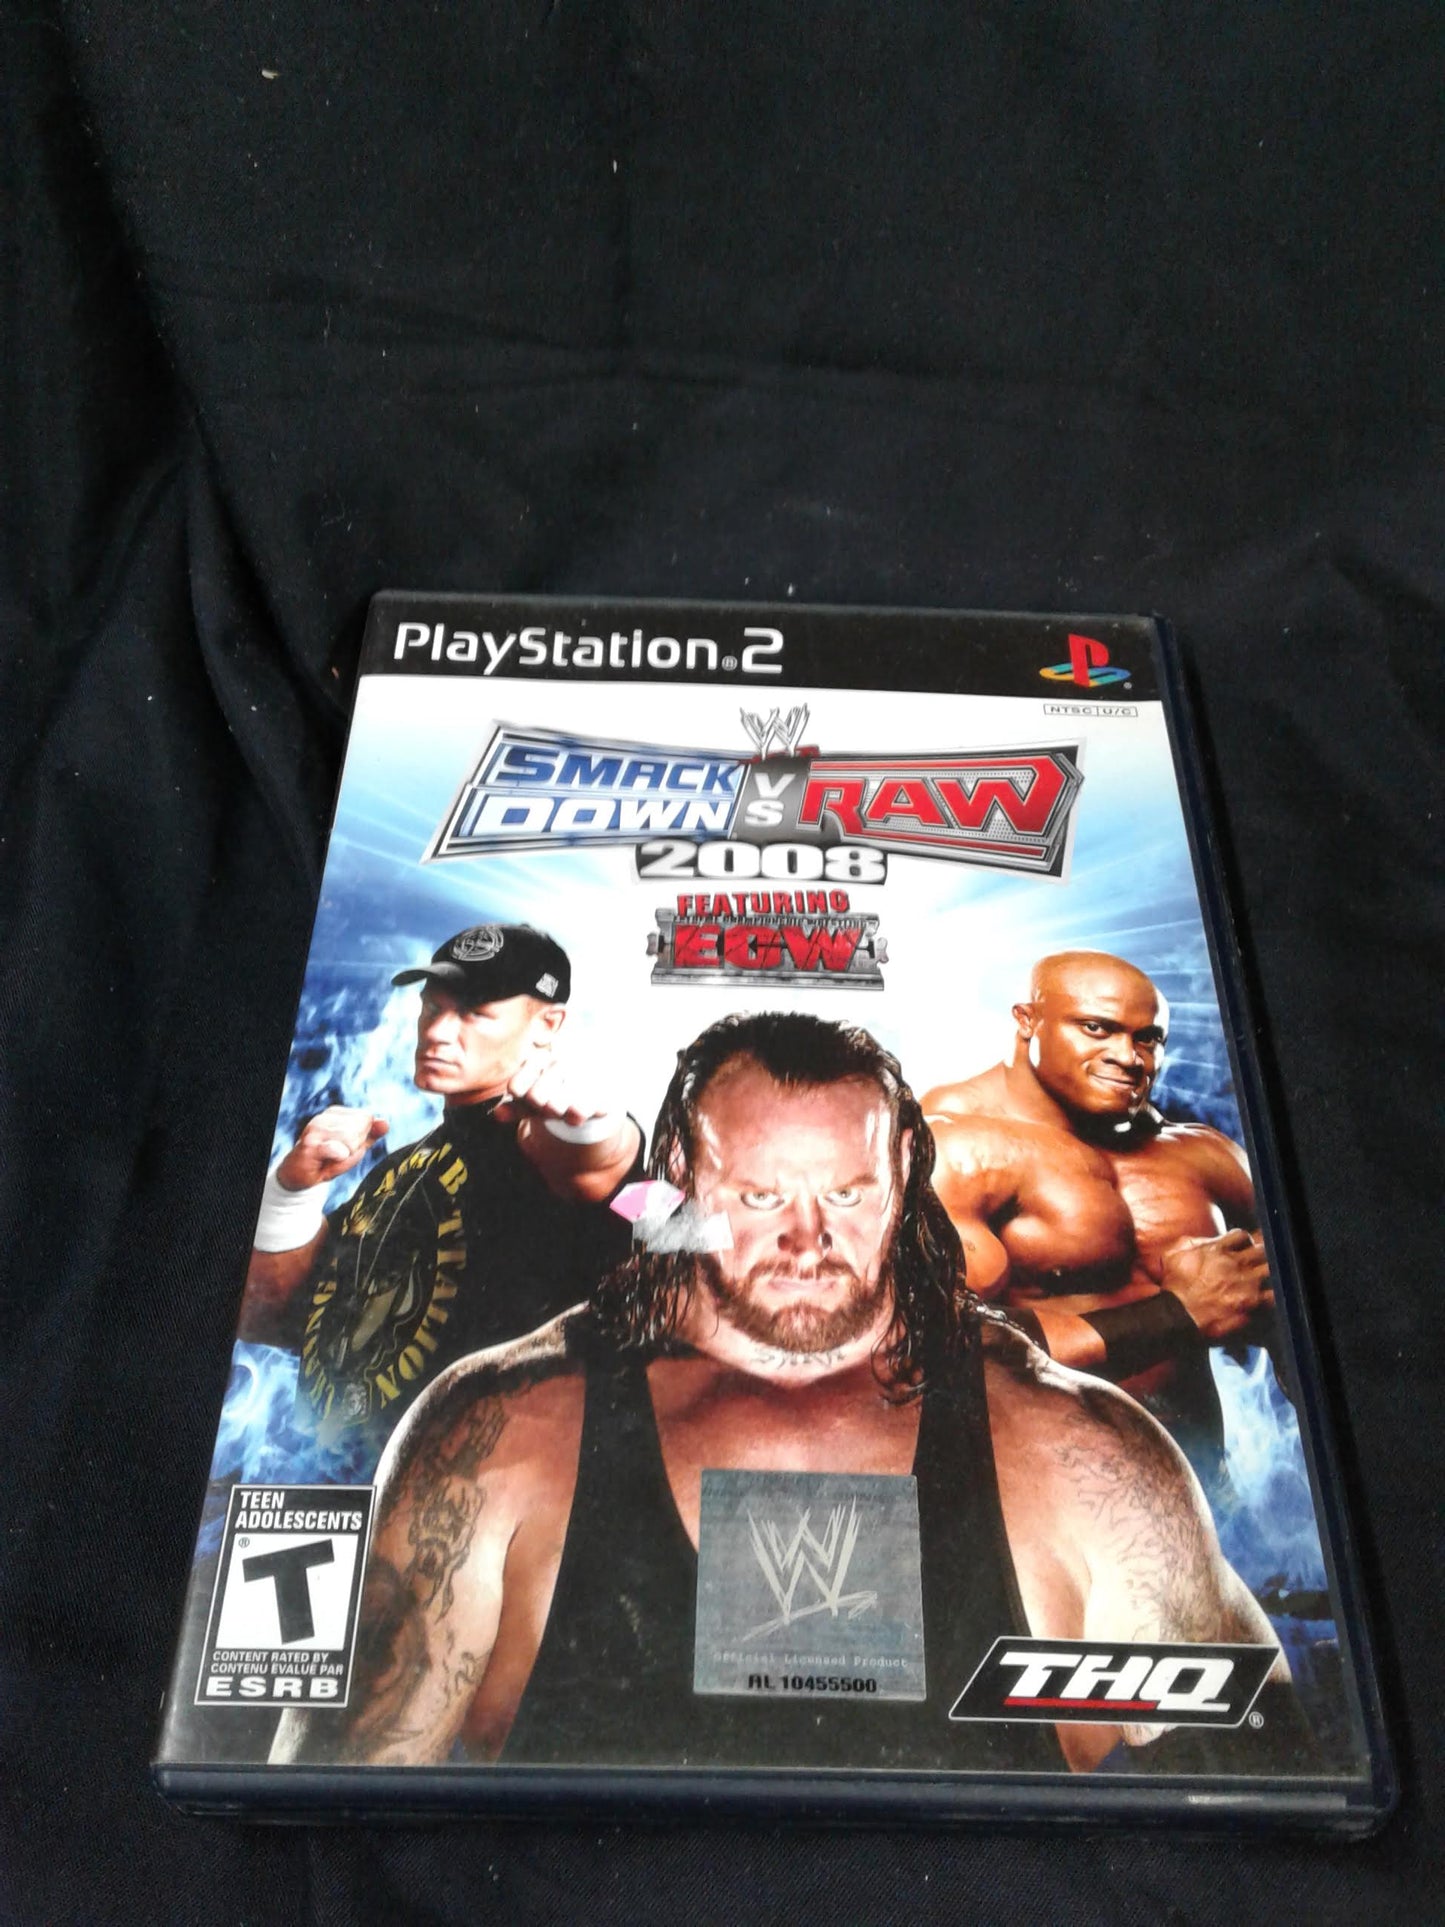 PS2 Smack down vs Raw 2008